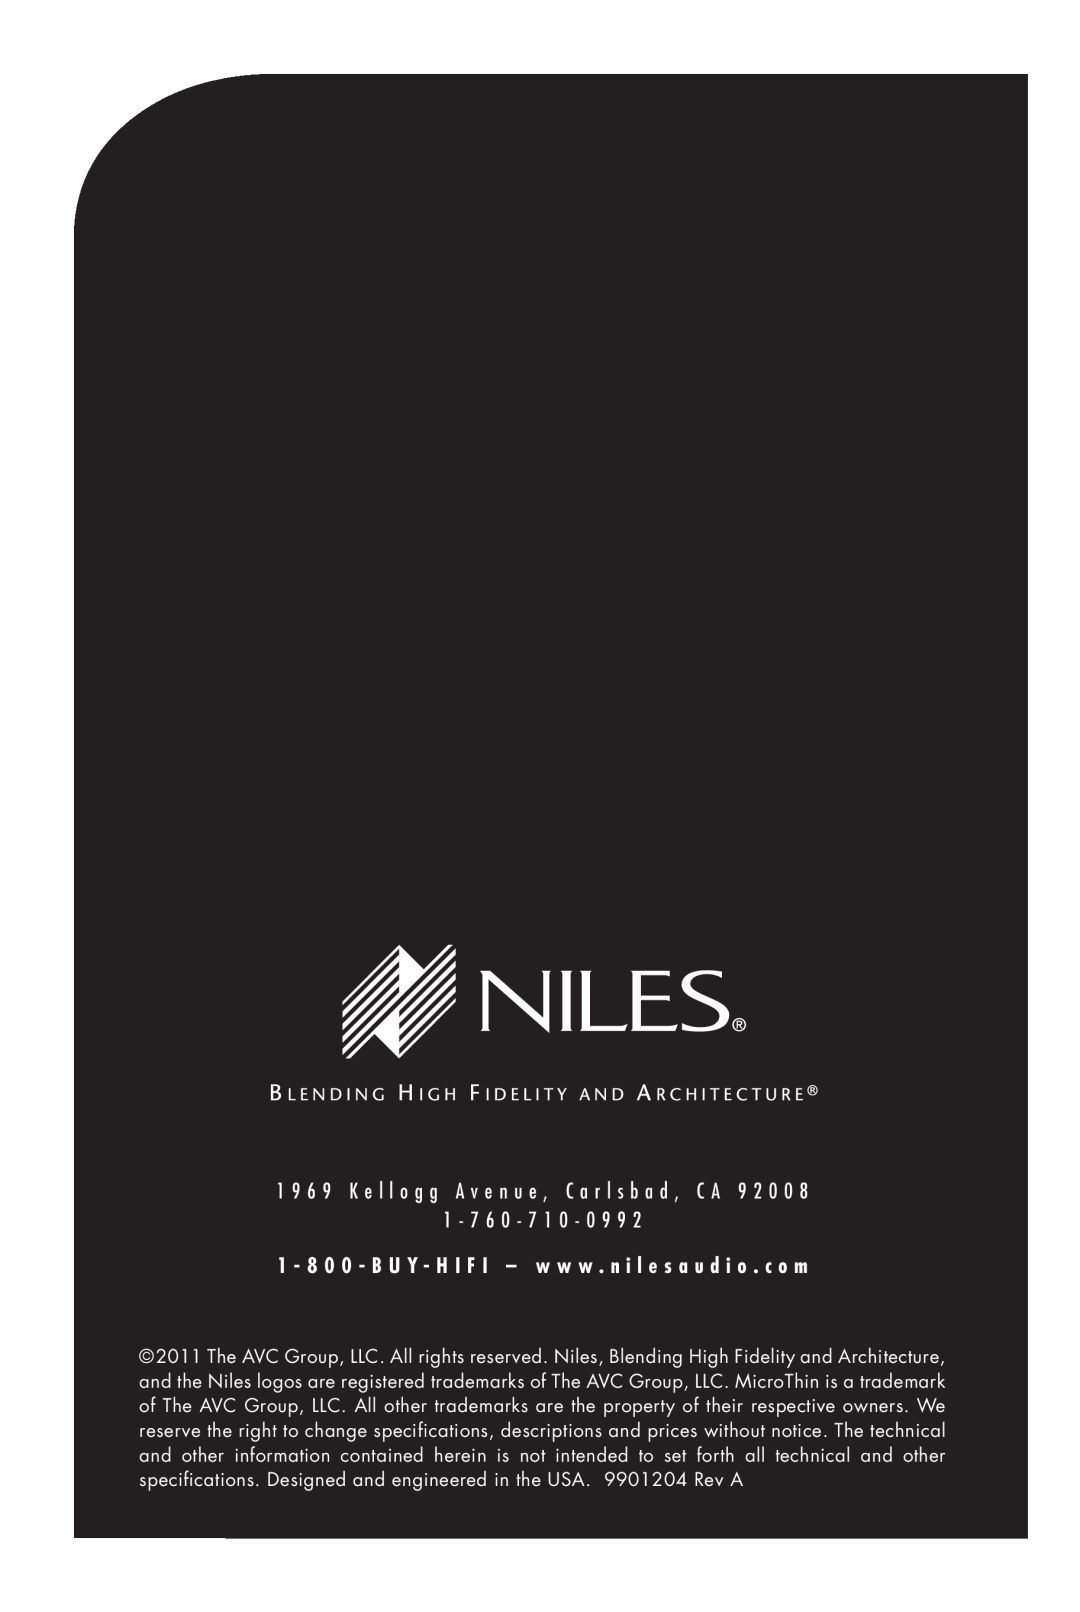 Niles Audio CM7SD manual 1 - 7 6 0 - 7 1 0 - 0 